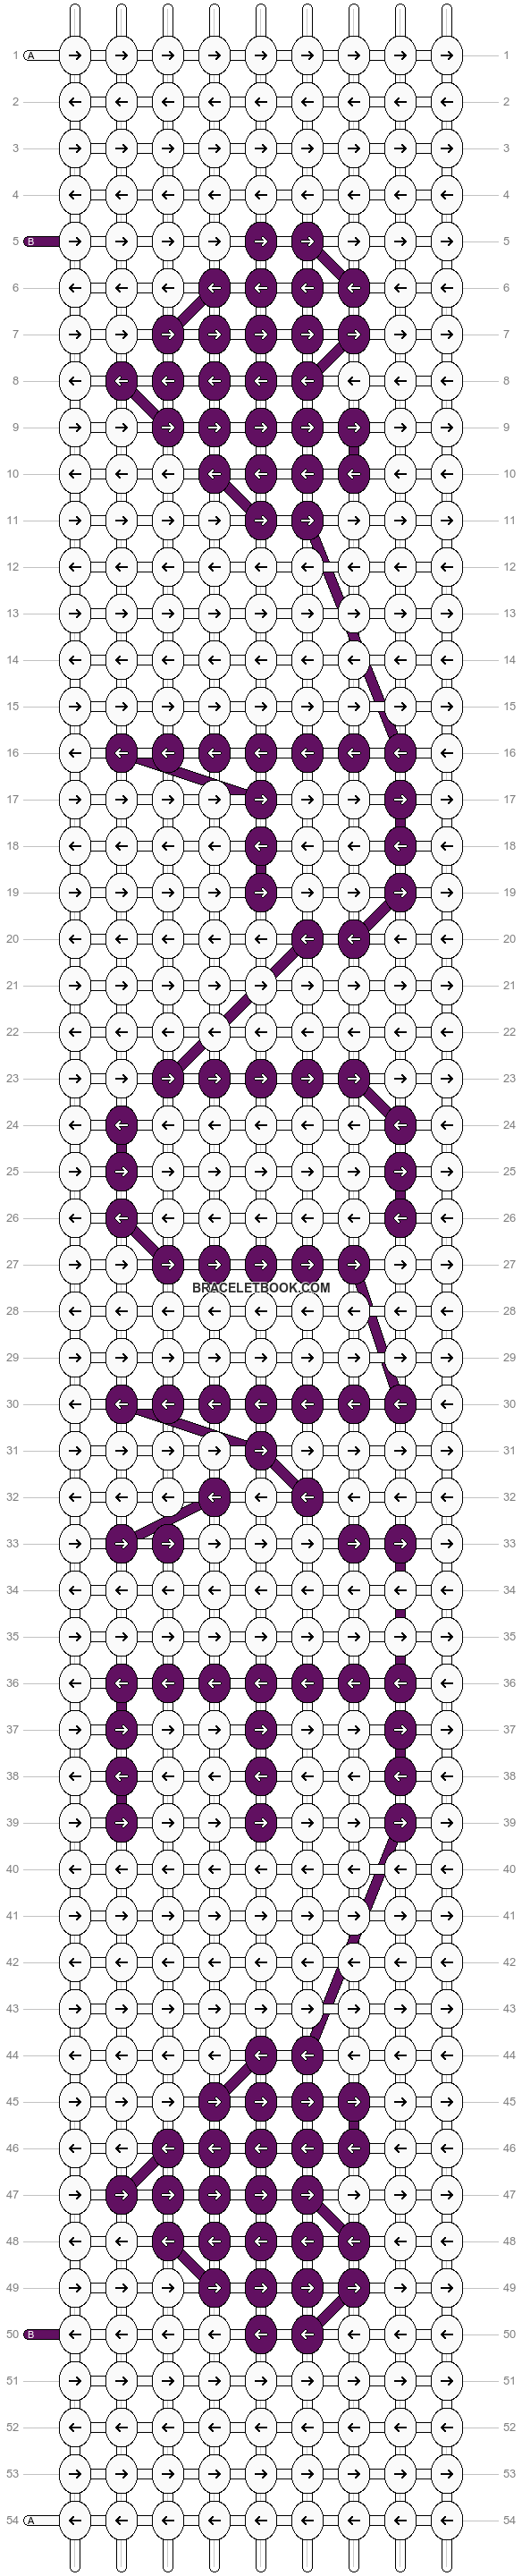 Alpha pattern #2397 pattern